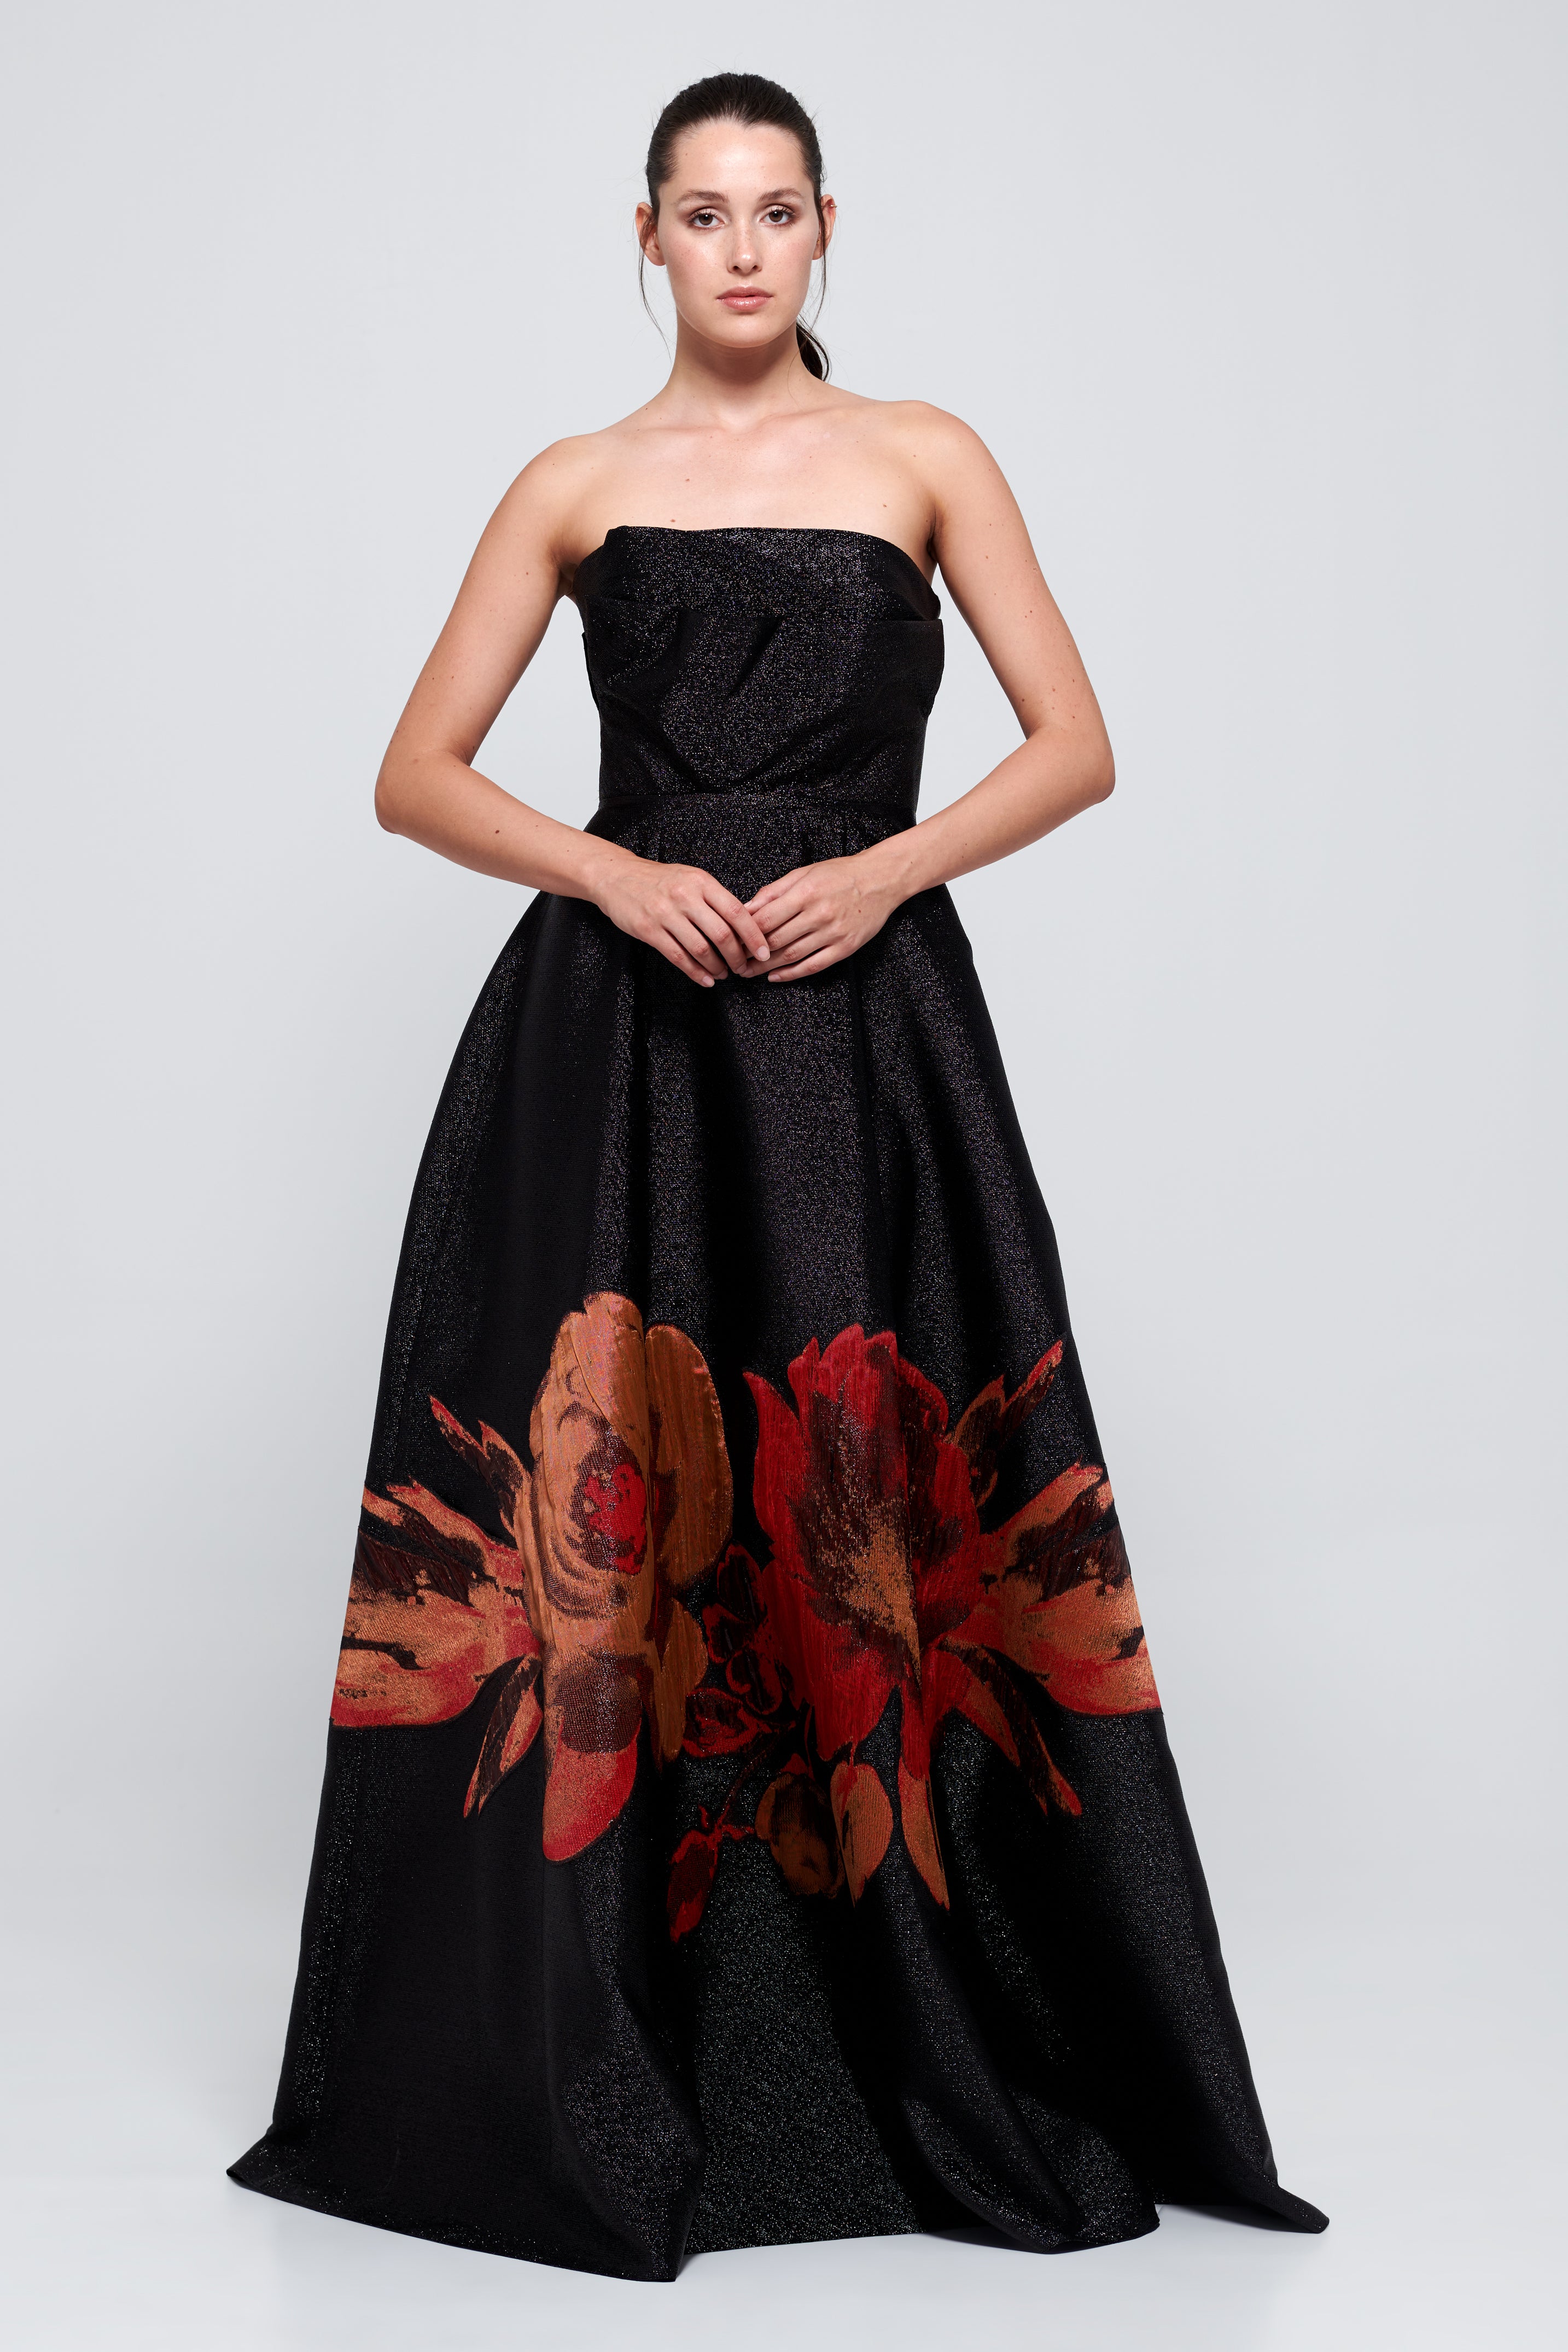 Glamorous Black Strapless Gown